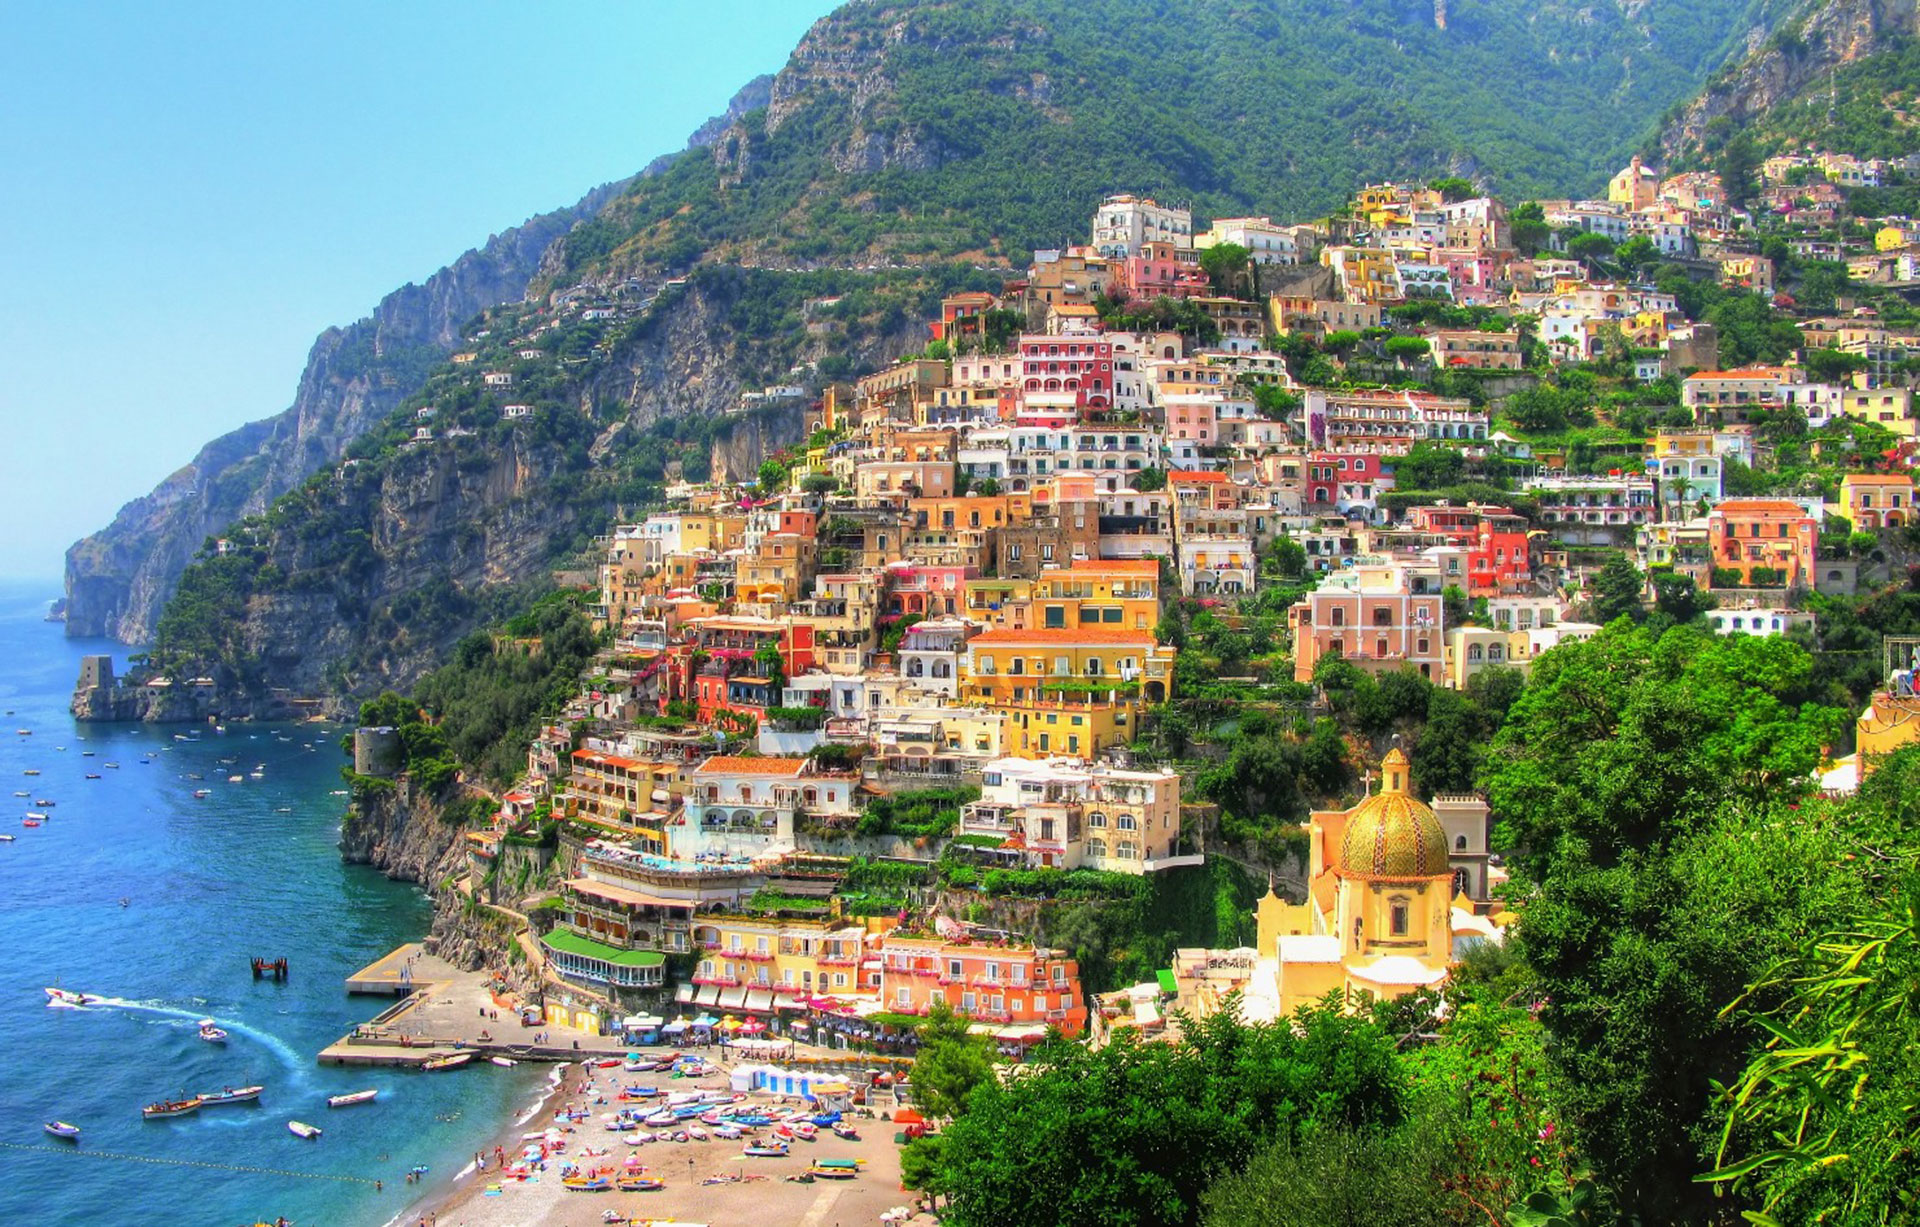 Amazing Amalfi Pictures & Backgrounds